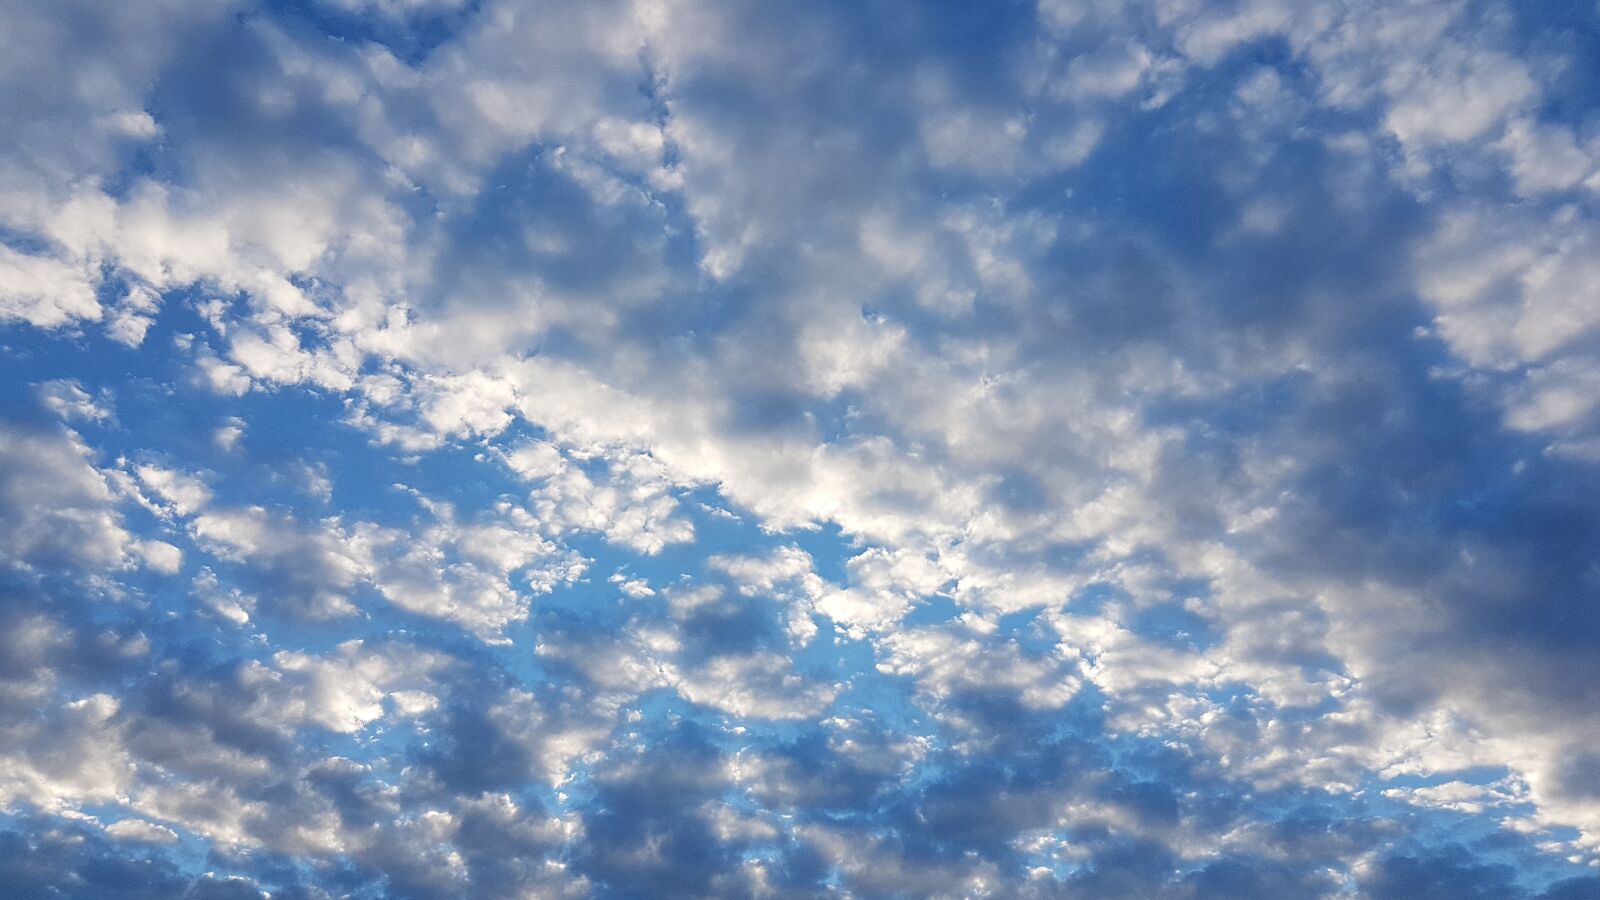 Samsung Galaxy S7 sample photo. Air, clouds, heaven photography